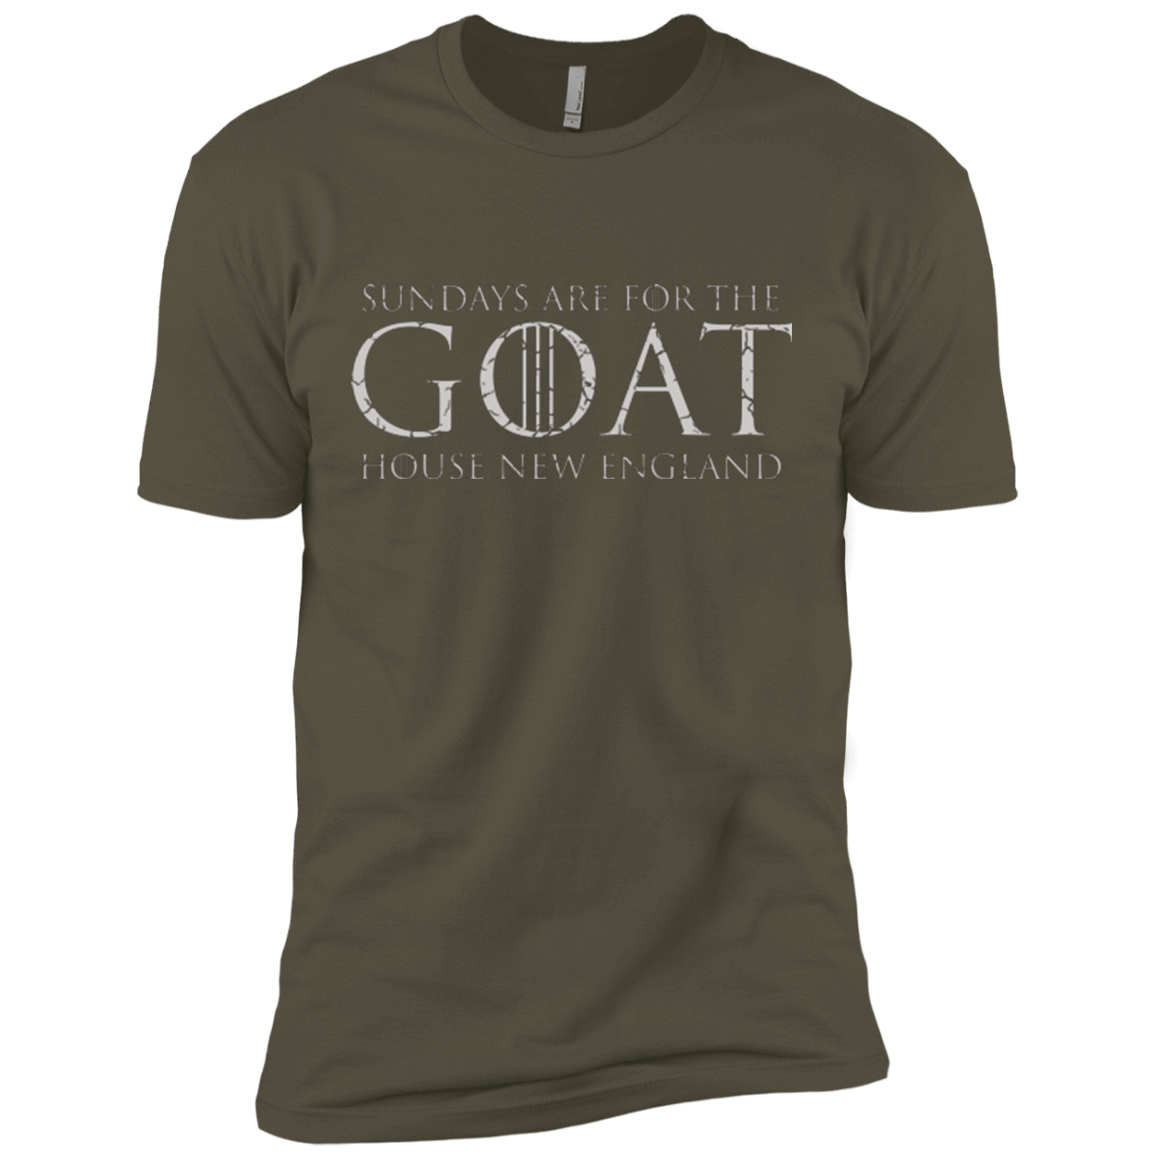 T-Shirts Military Green / X-Small GOAT Men's Premium T-Shirt